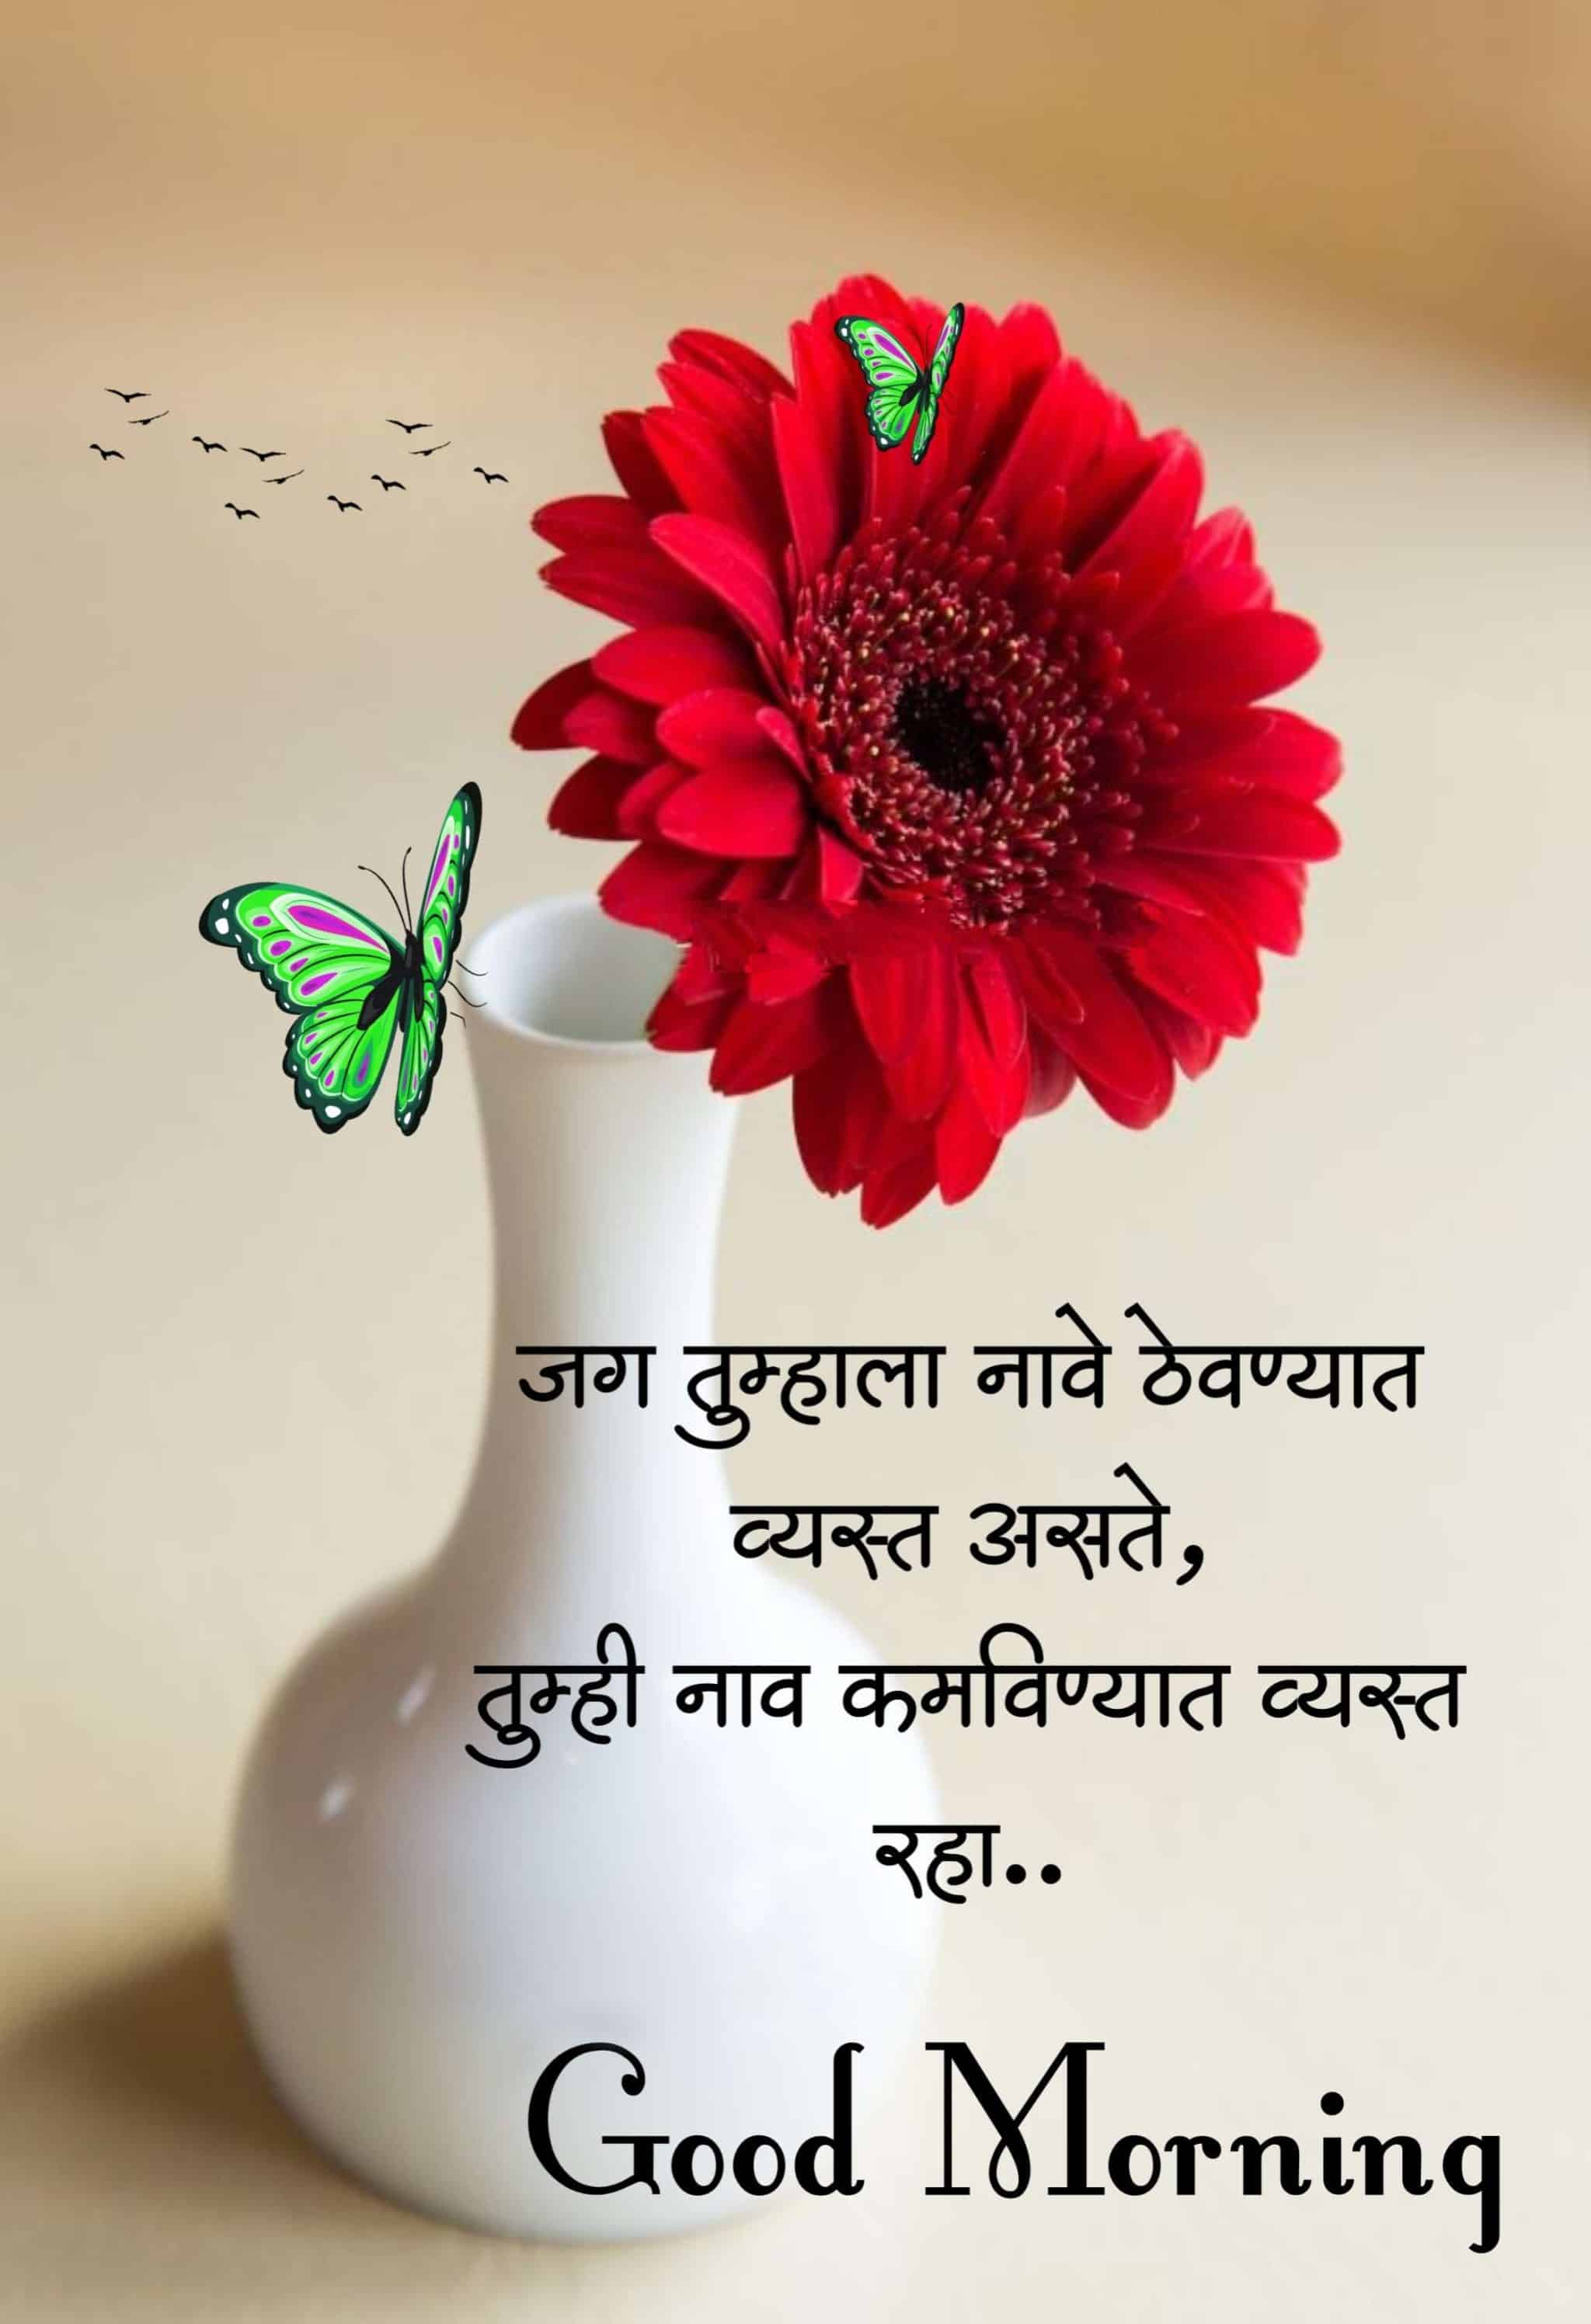 Good Morning Attitude Quotes in Marathi (17)